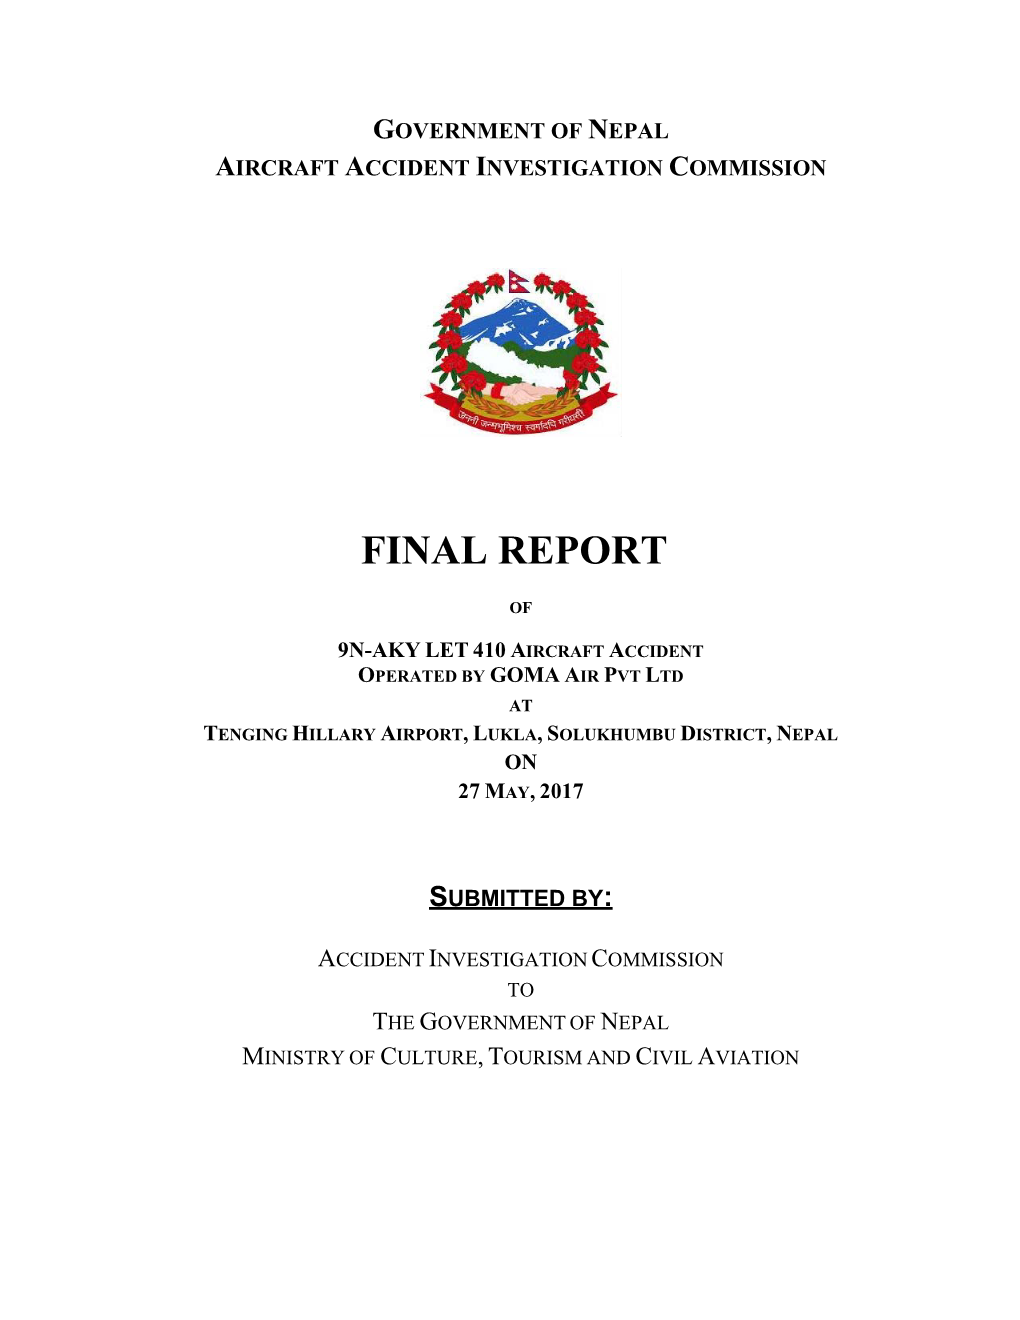 Final Report L410 (9N-AKY)